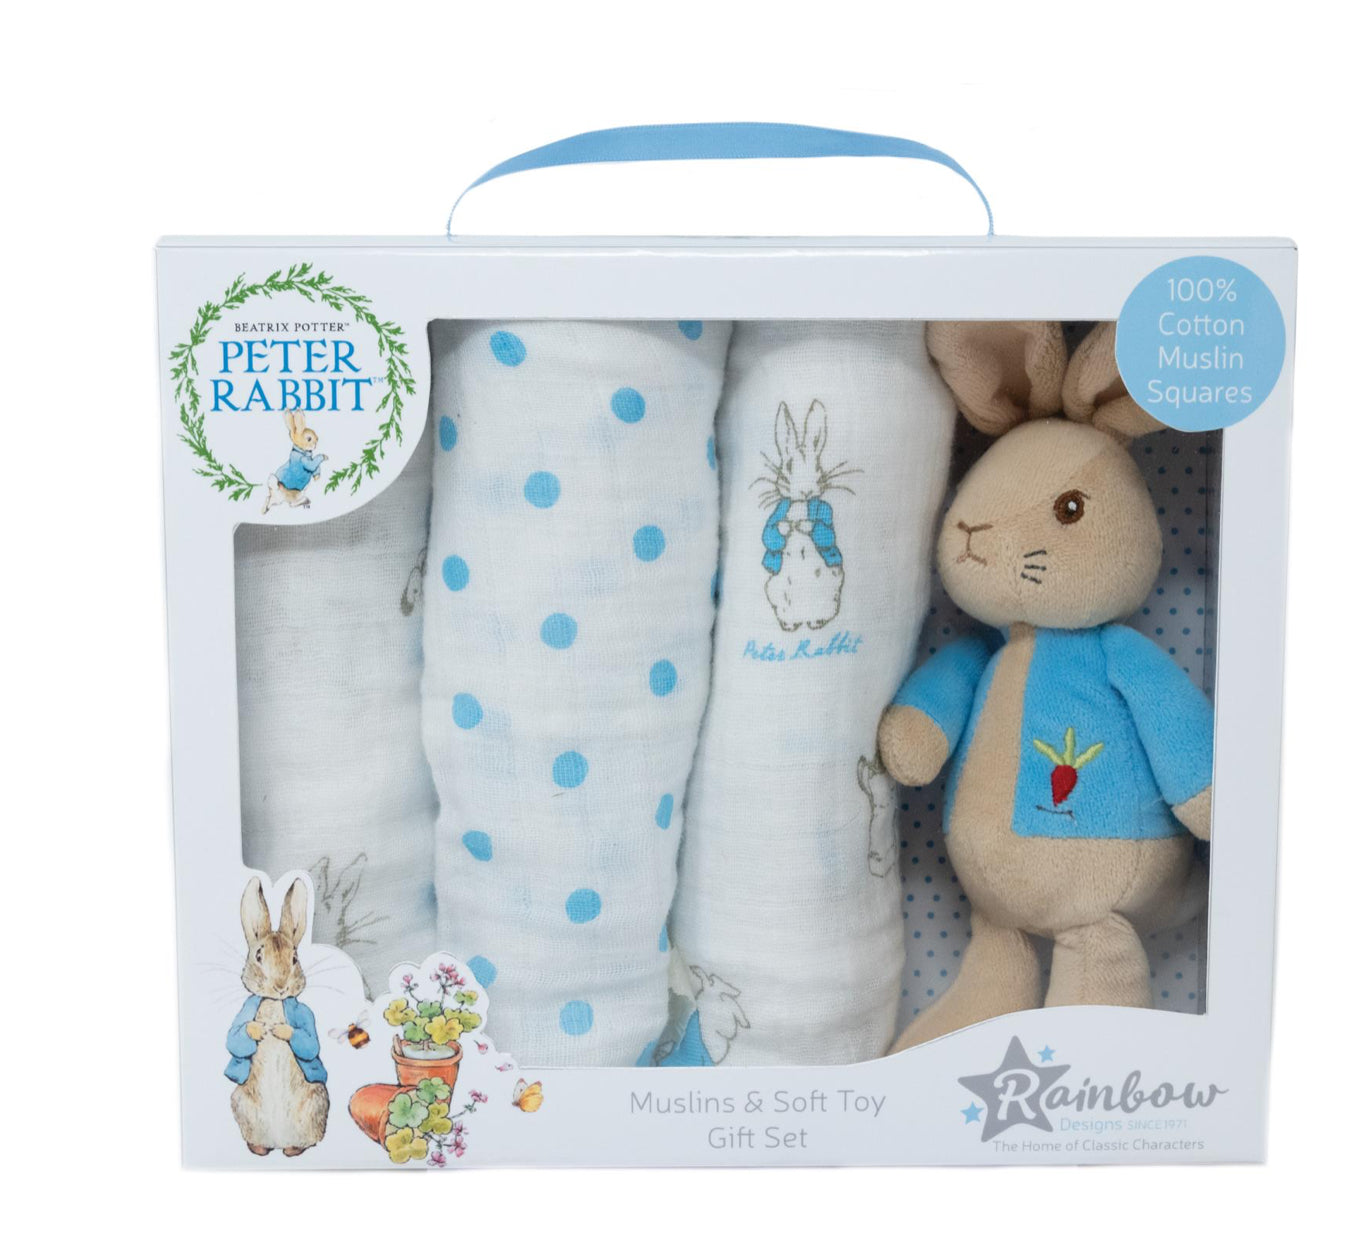 Peter Rabbit Soft Toy & Muslins Gift Set Rainbow Toys